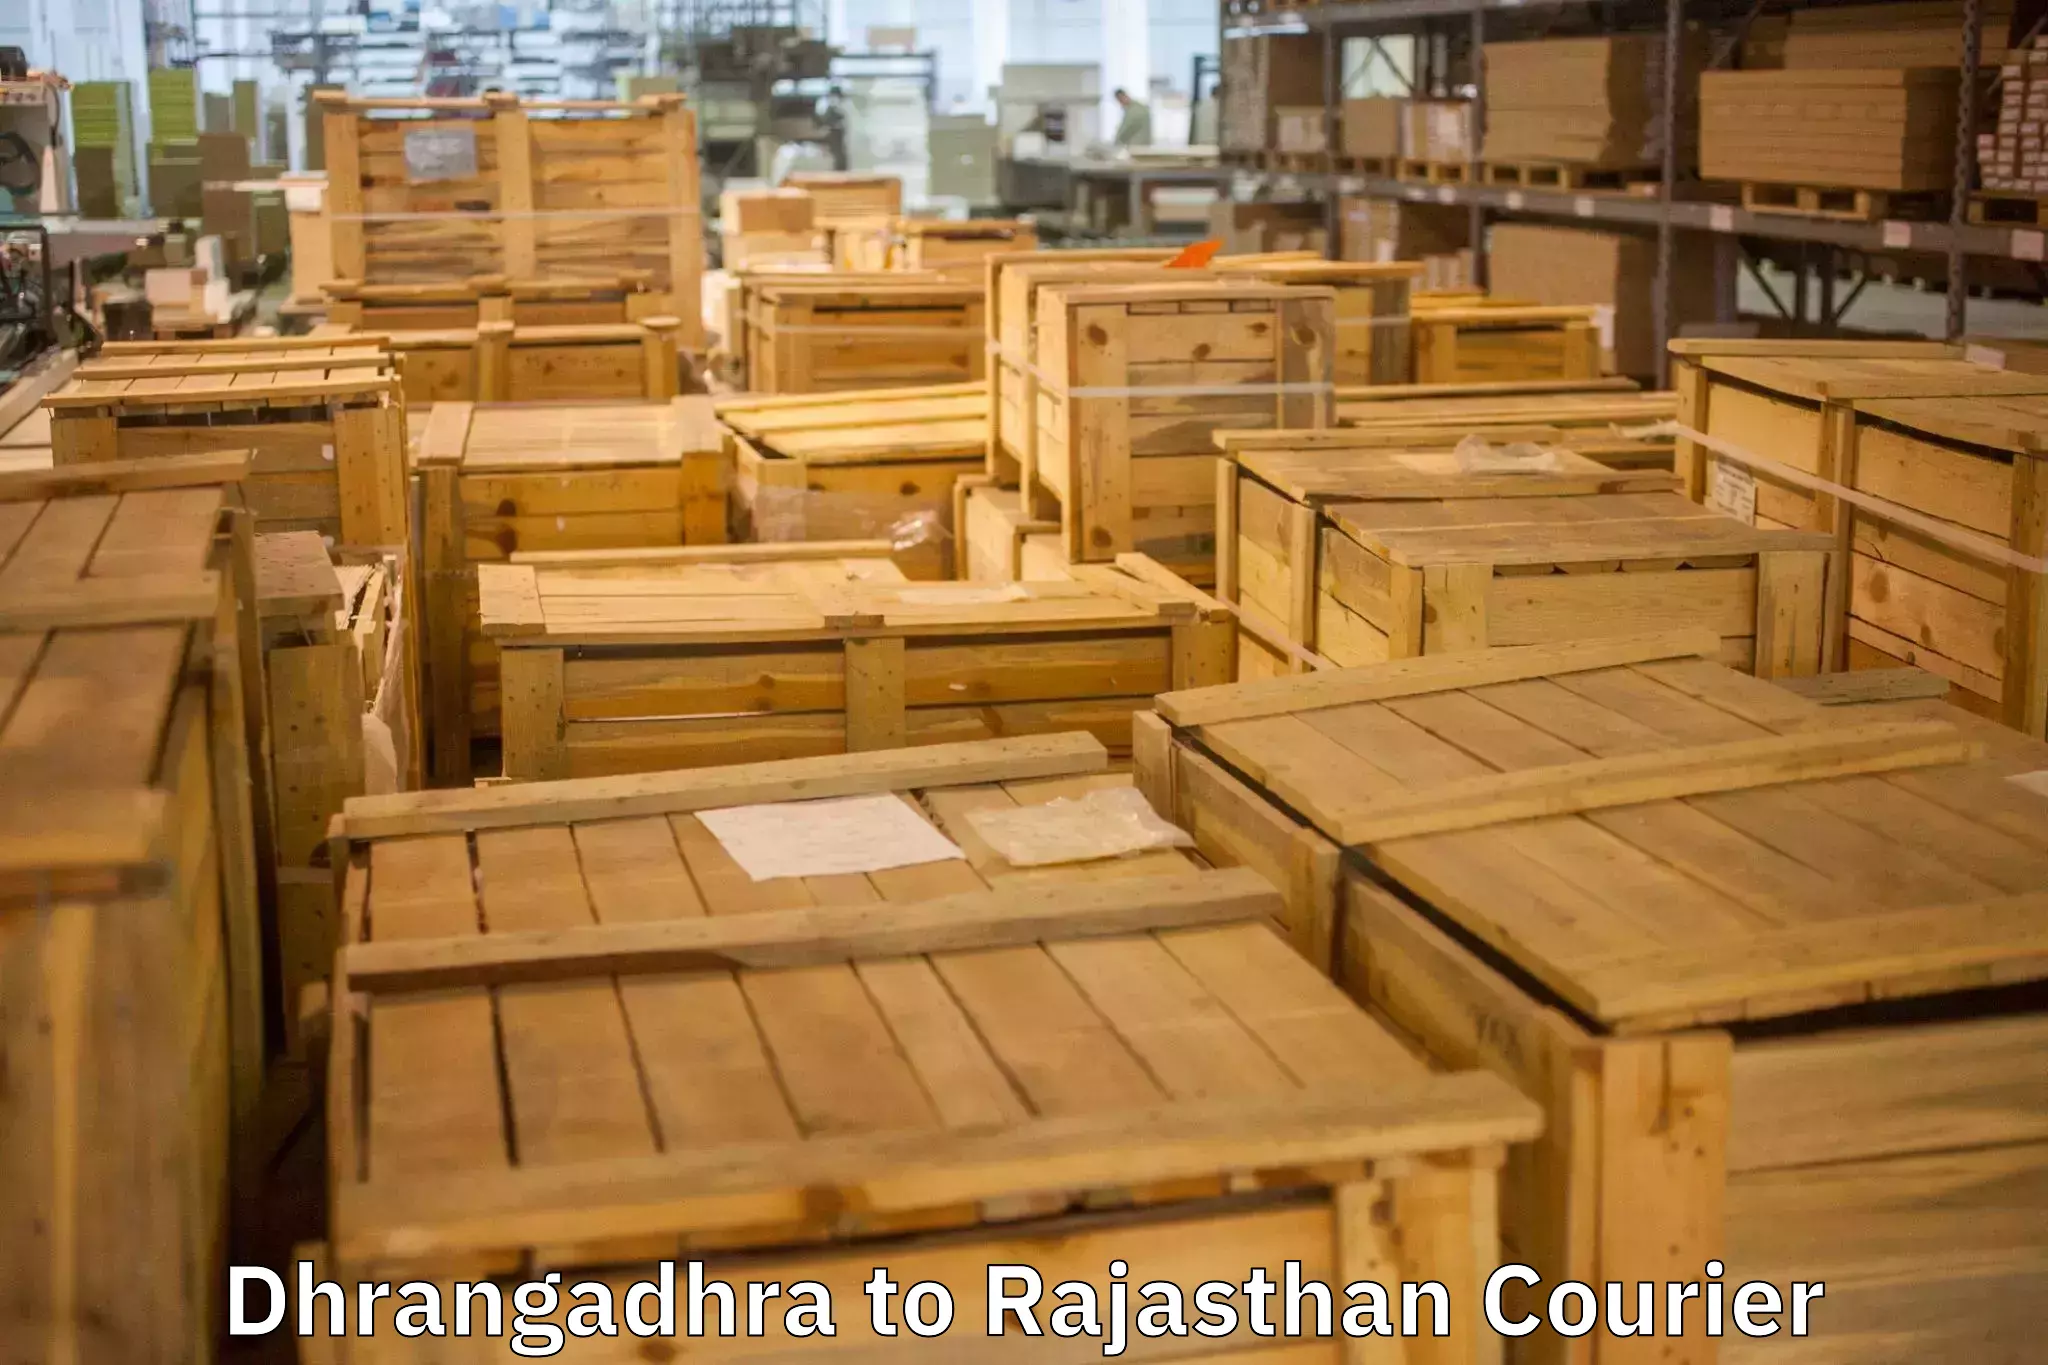 Professional moving company Dhrangadhra to Sultana